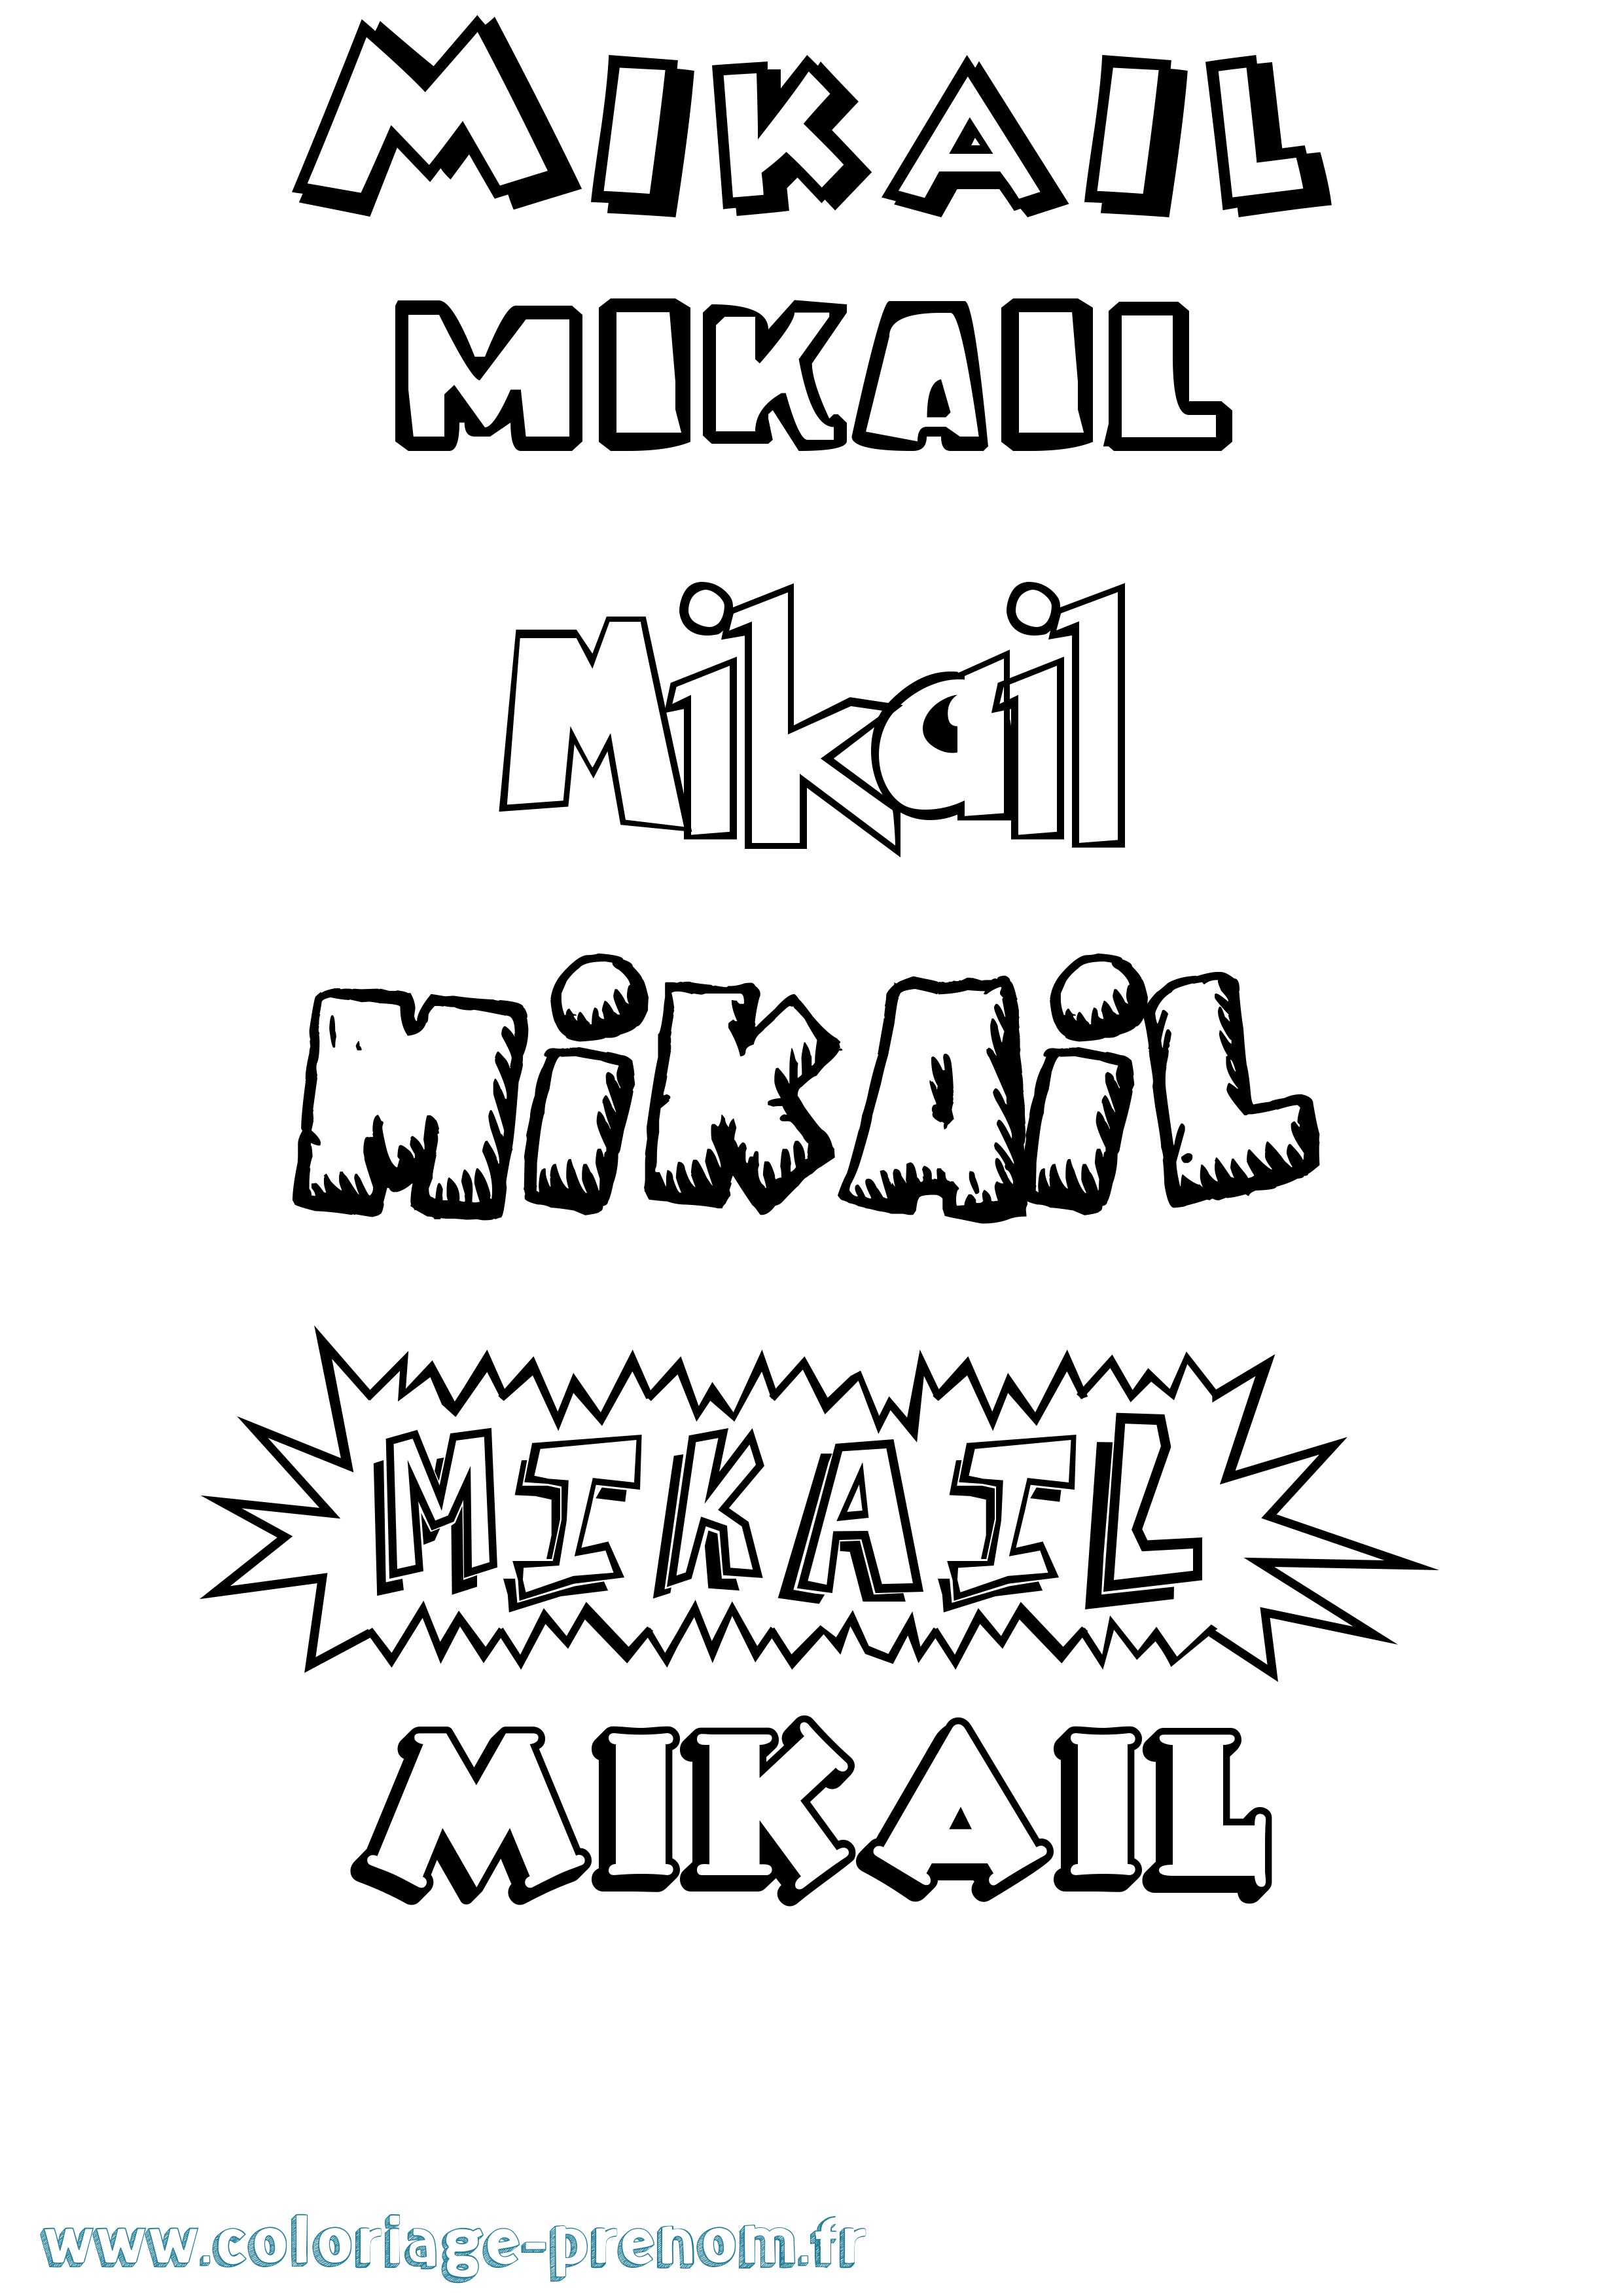 Coloriage prénom Mikail